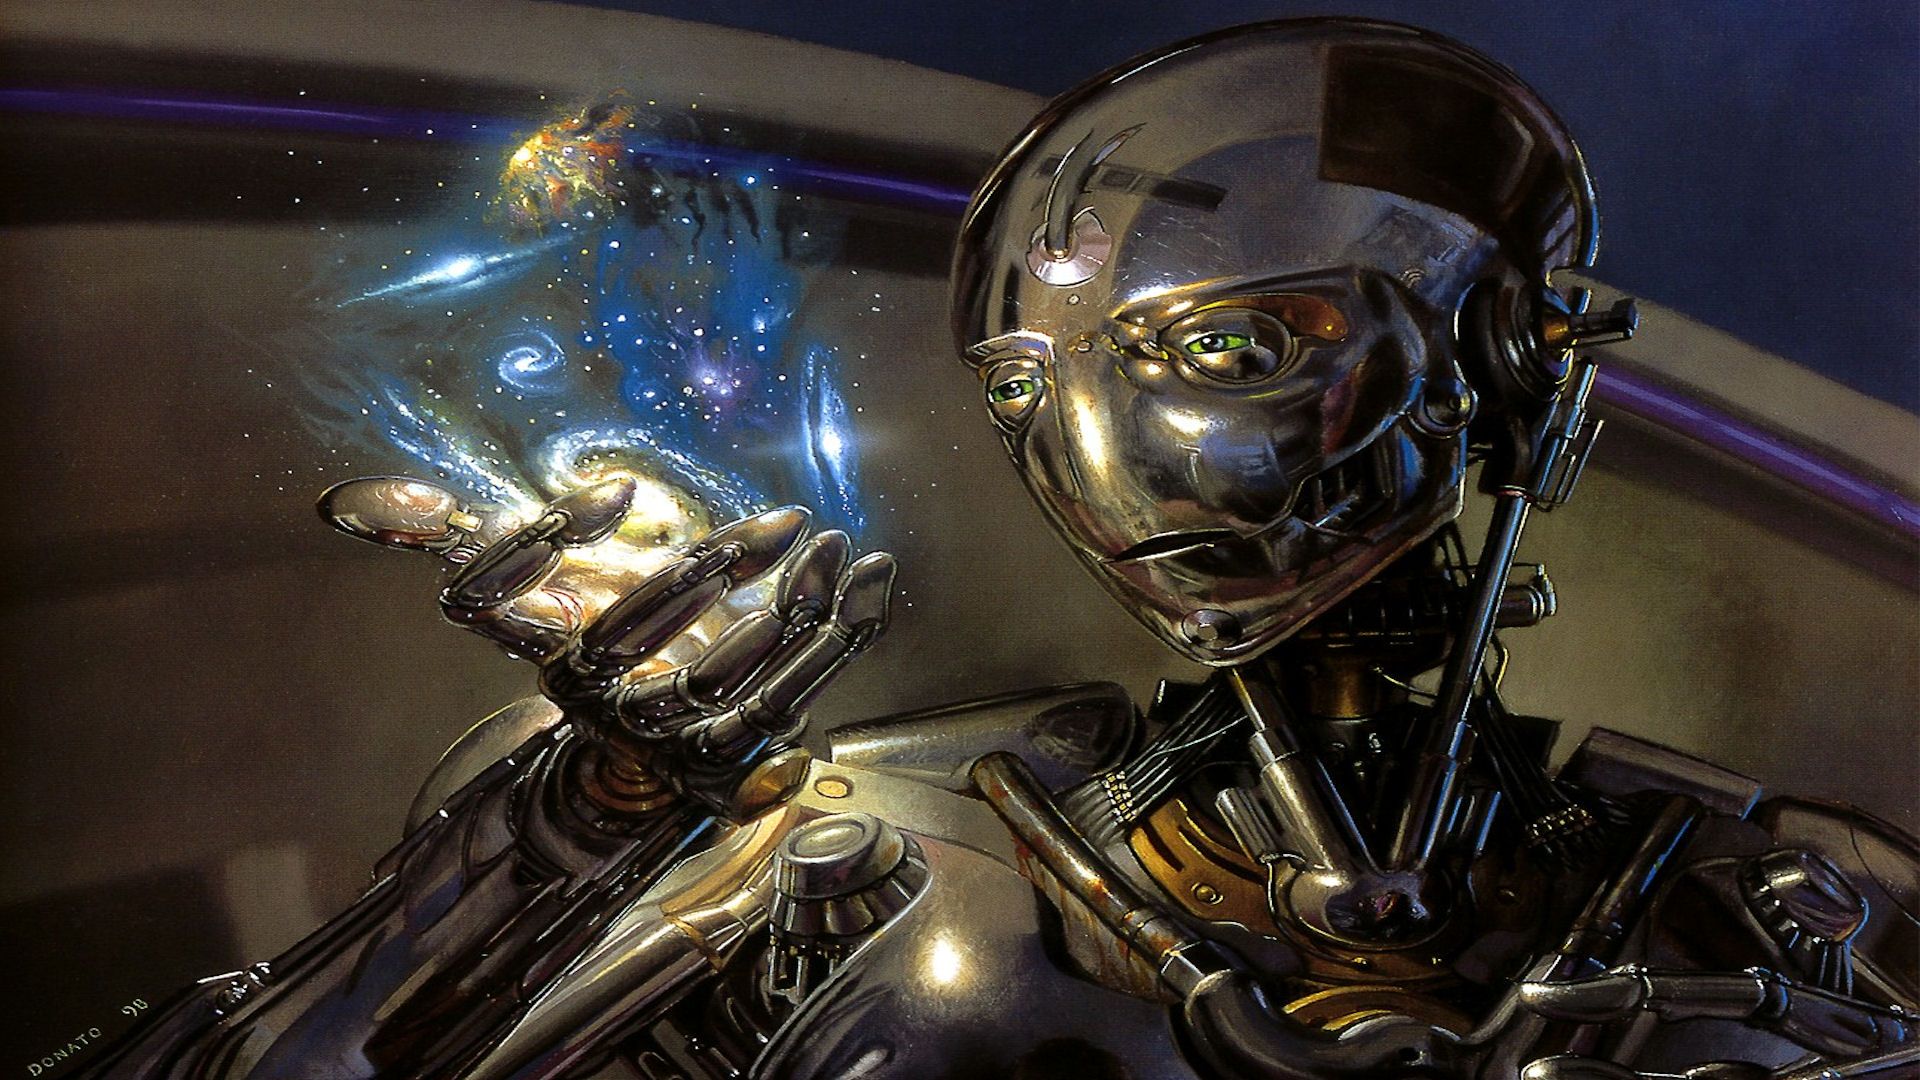 Cyberpunk Sci Fi Wallpaper 25 x Image Gallery